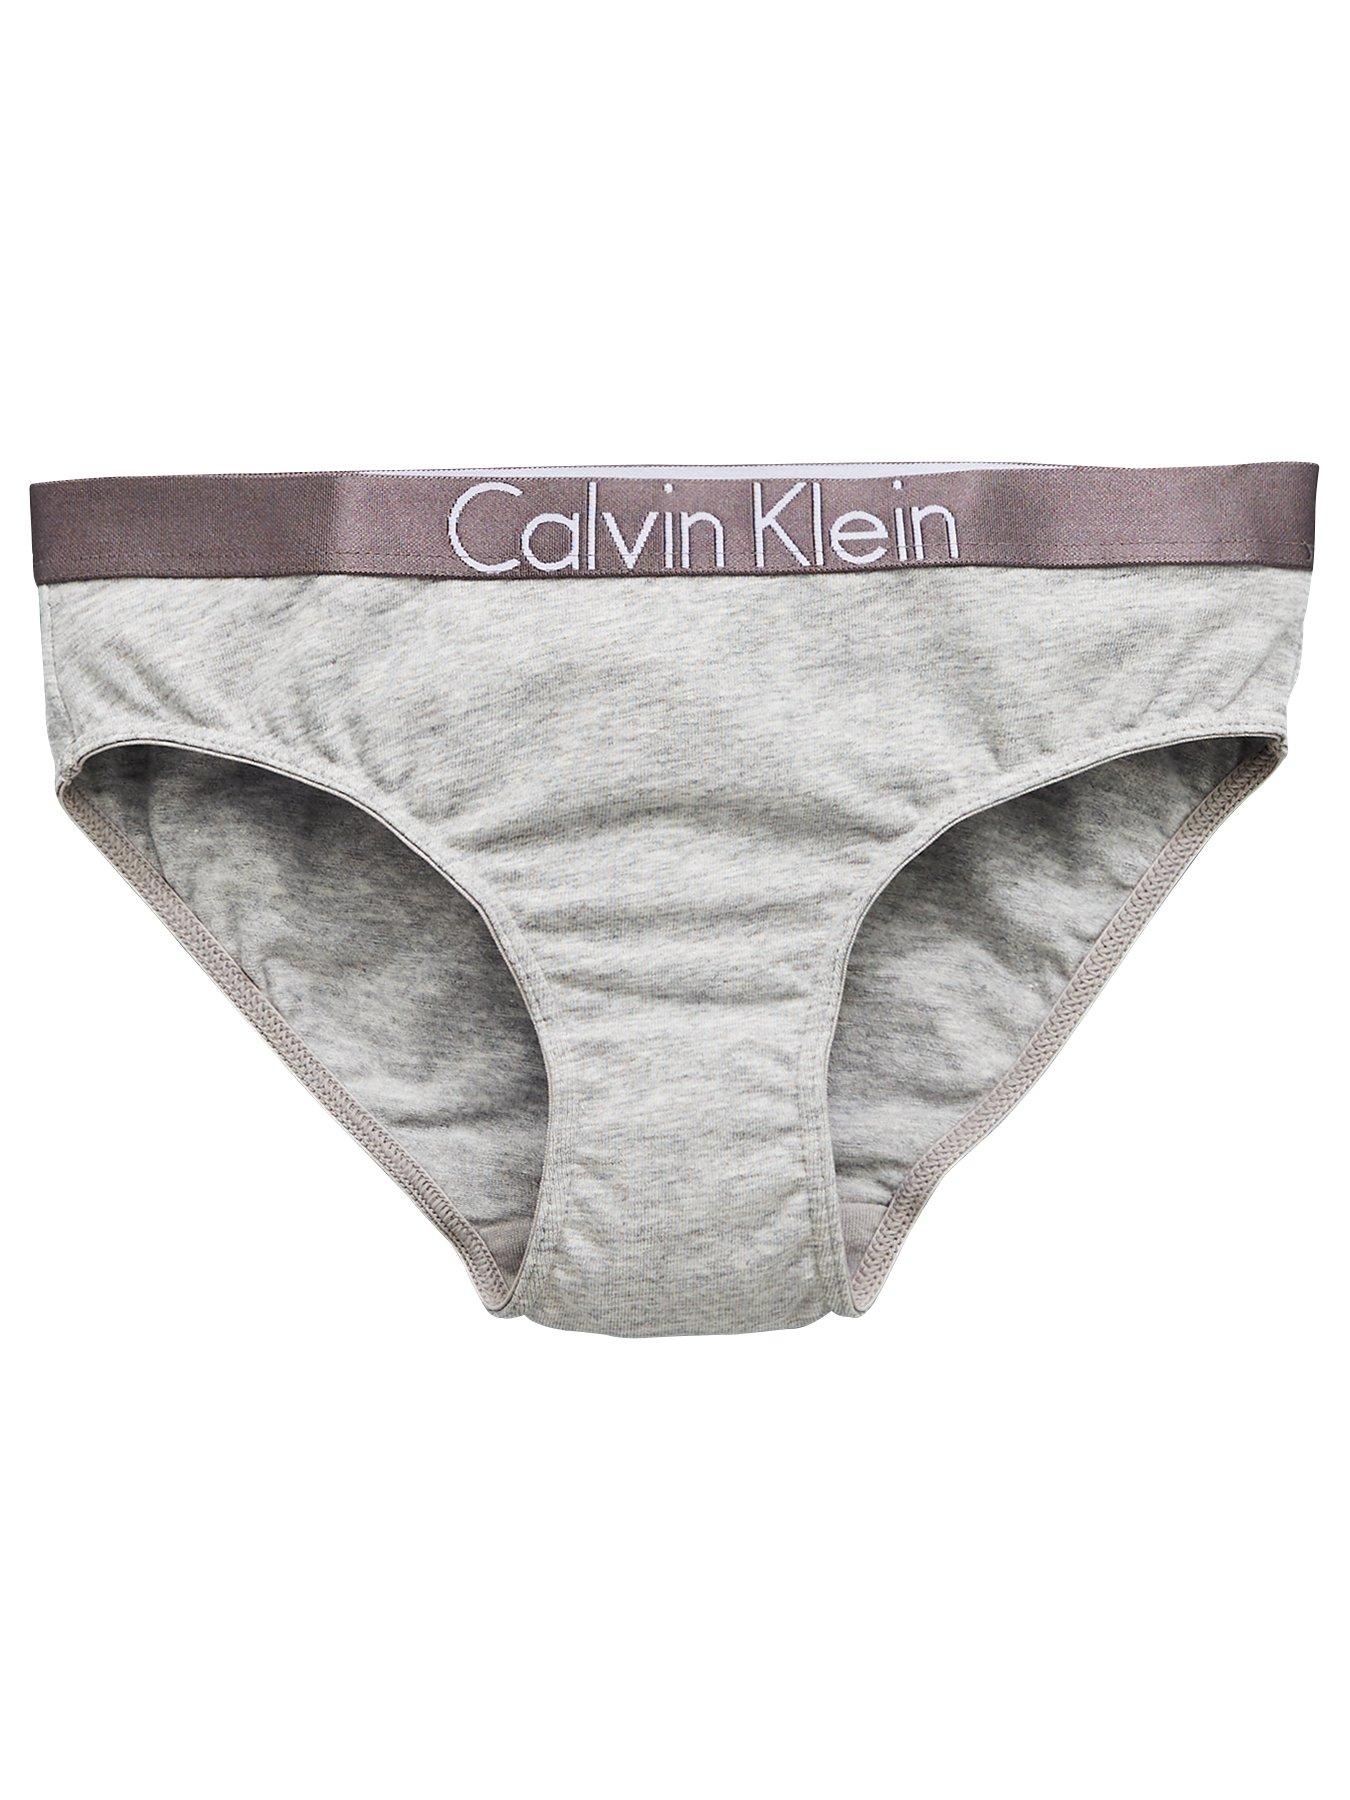 Calvin Klein Girls Red & White Bikini Brief (2 Pack)